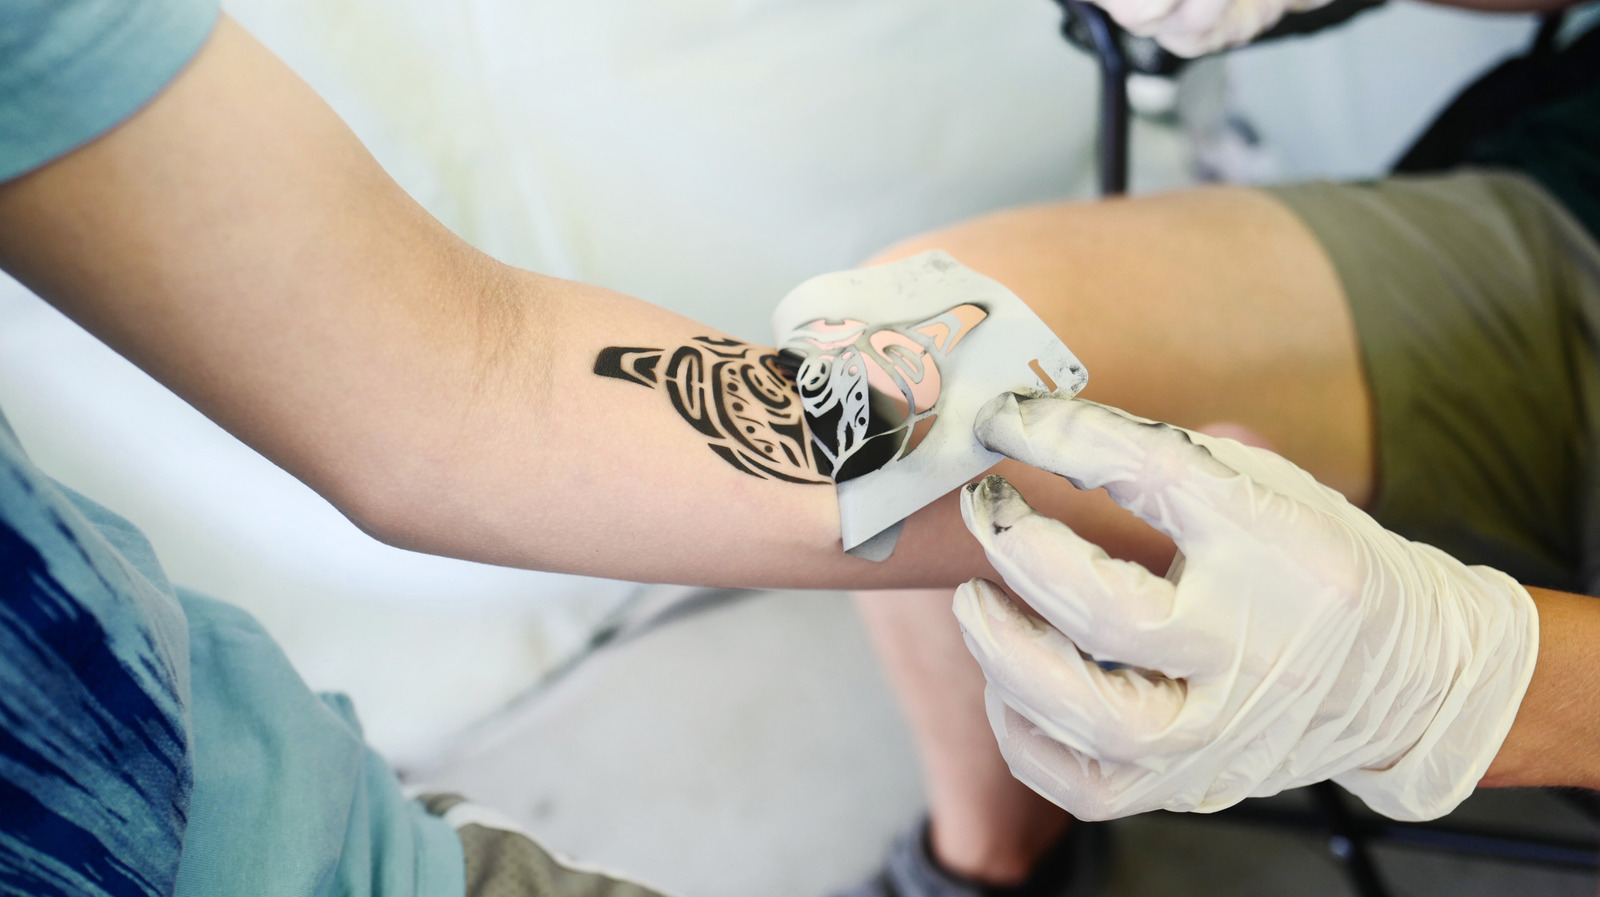 Travellers Temporary Tattoo Kit  Tattoo Gizmo  Buy Online at  tattoogizmocom